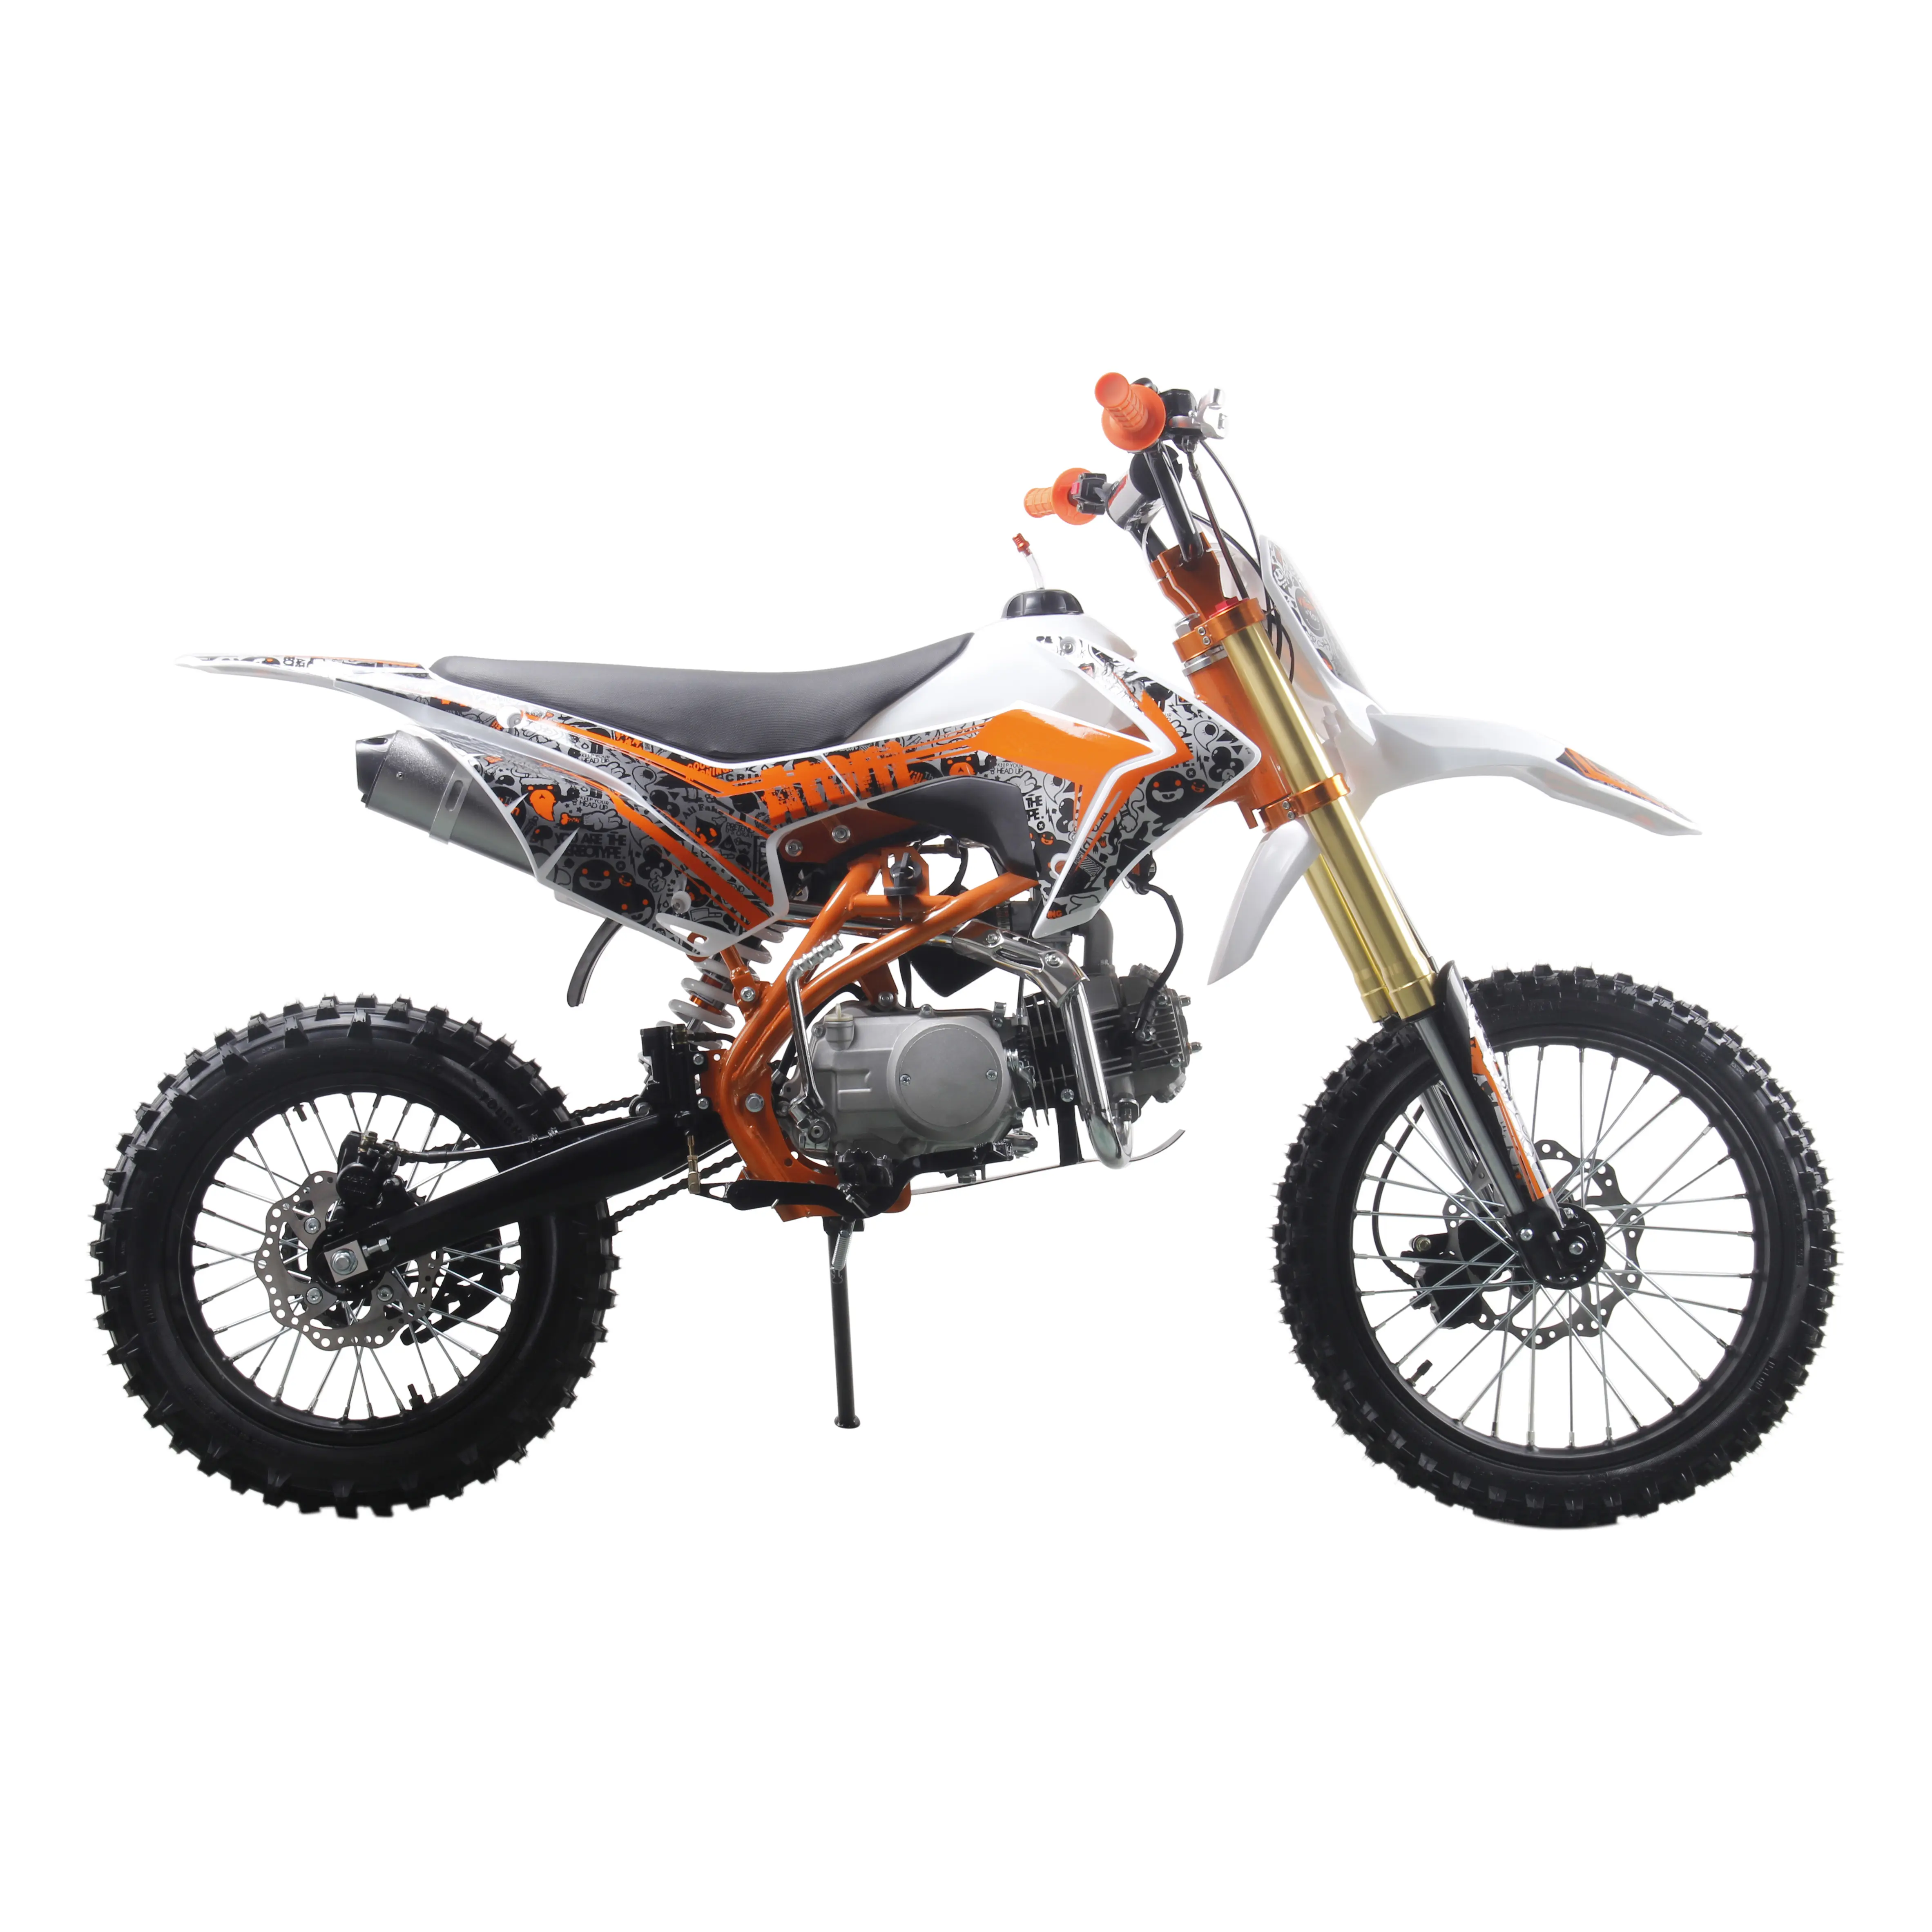 APAQ Enduro 125cc/140cc/160cc Pit Bike for Adults Gas Fuel 4 Stroke 200cc Engine Disc Brake F/R Kick Start